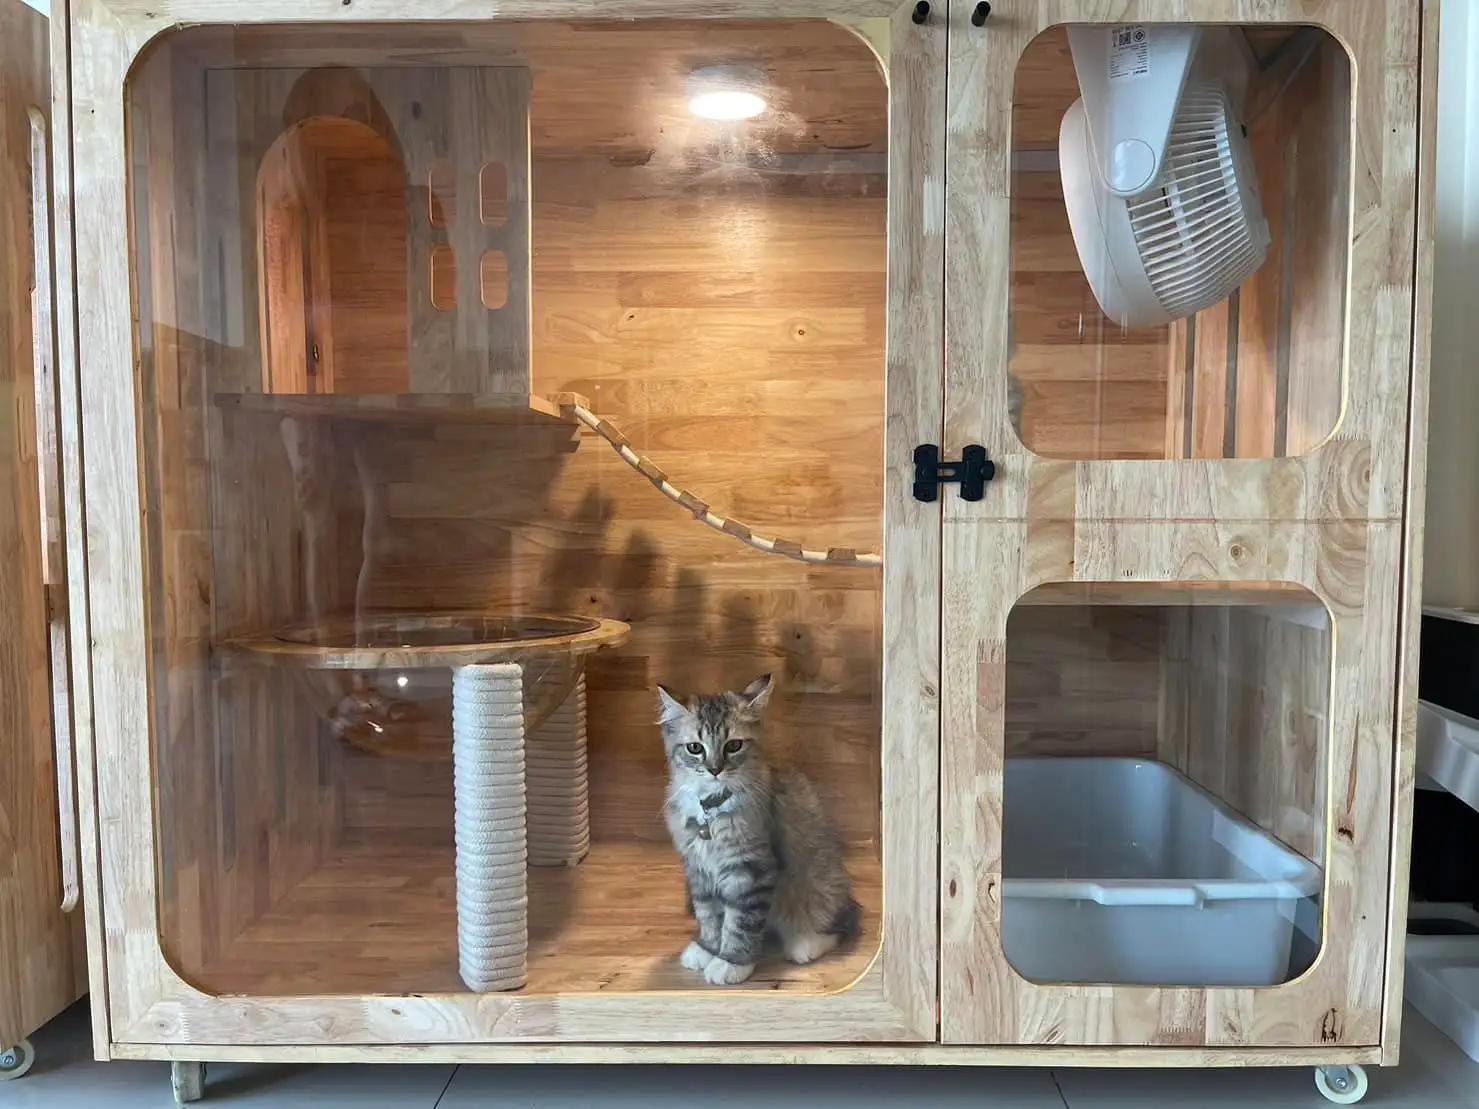 Cat Nit-Tra Cafe’ & Hotel : โรงแรมแมวแคทนิทรา